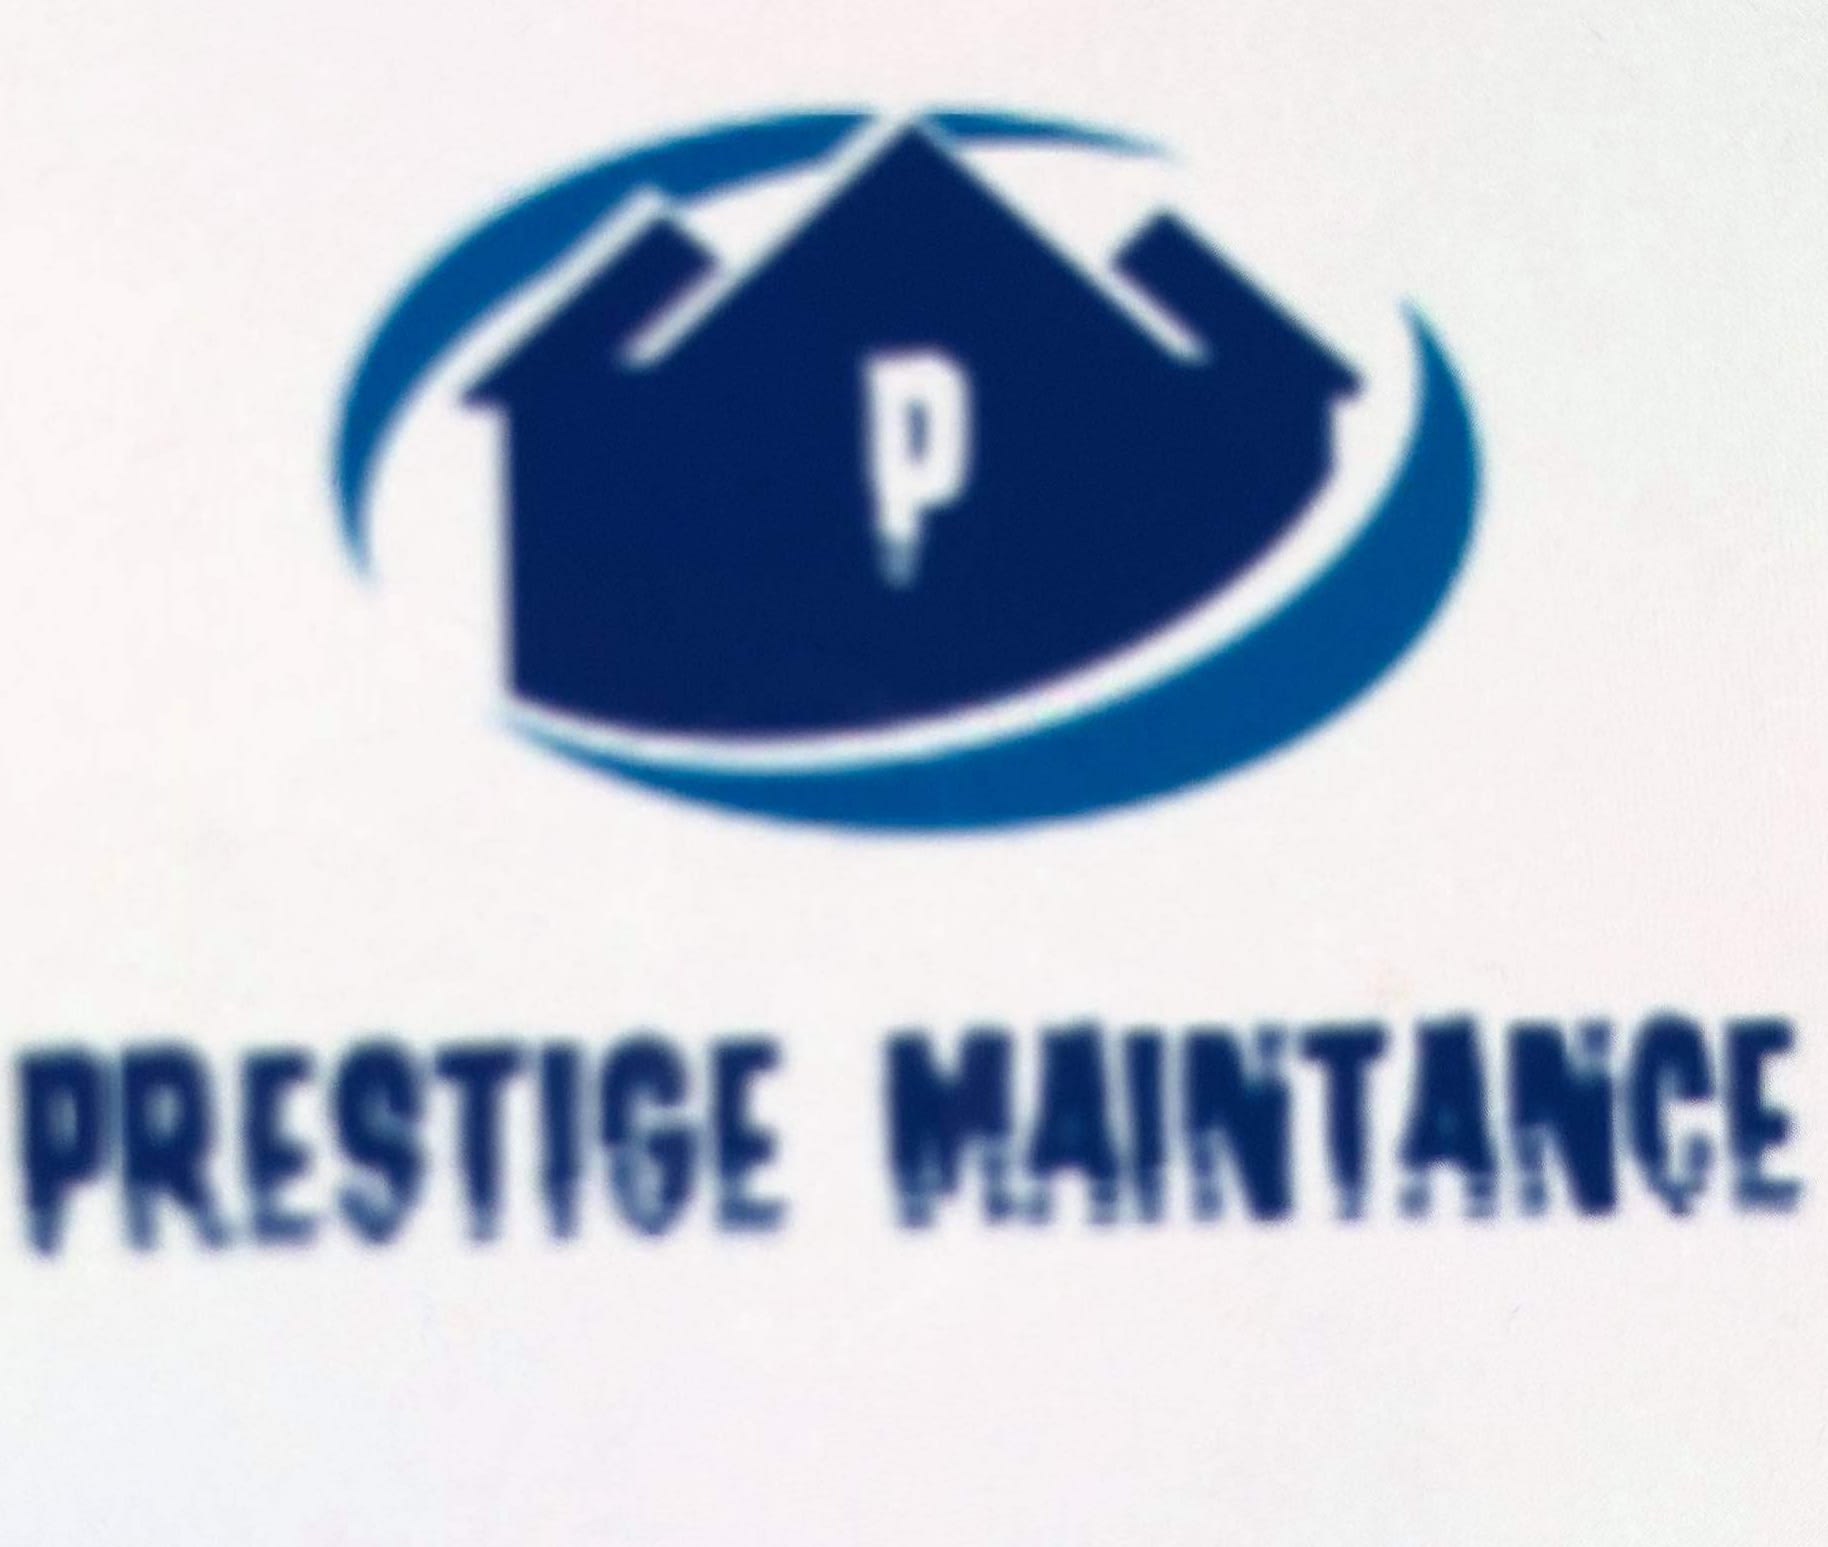 Prestige Maintance